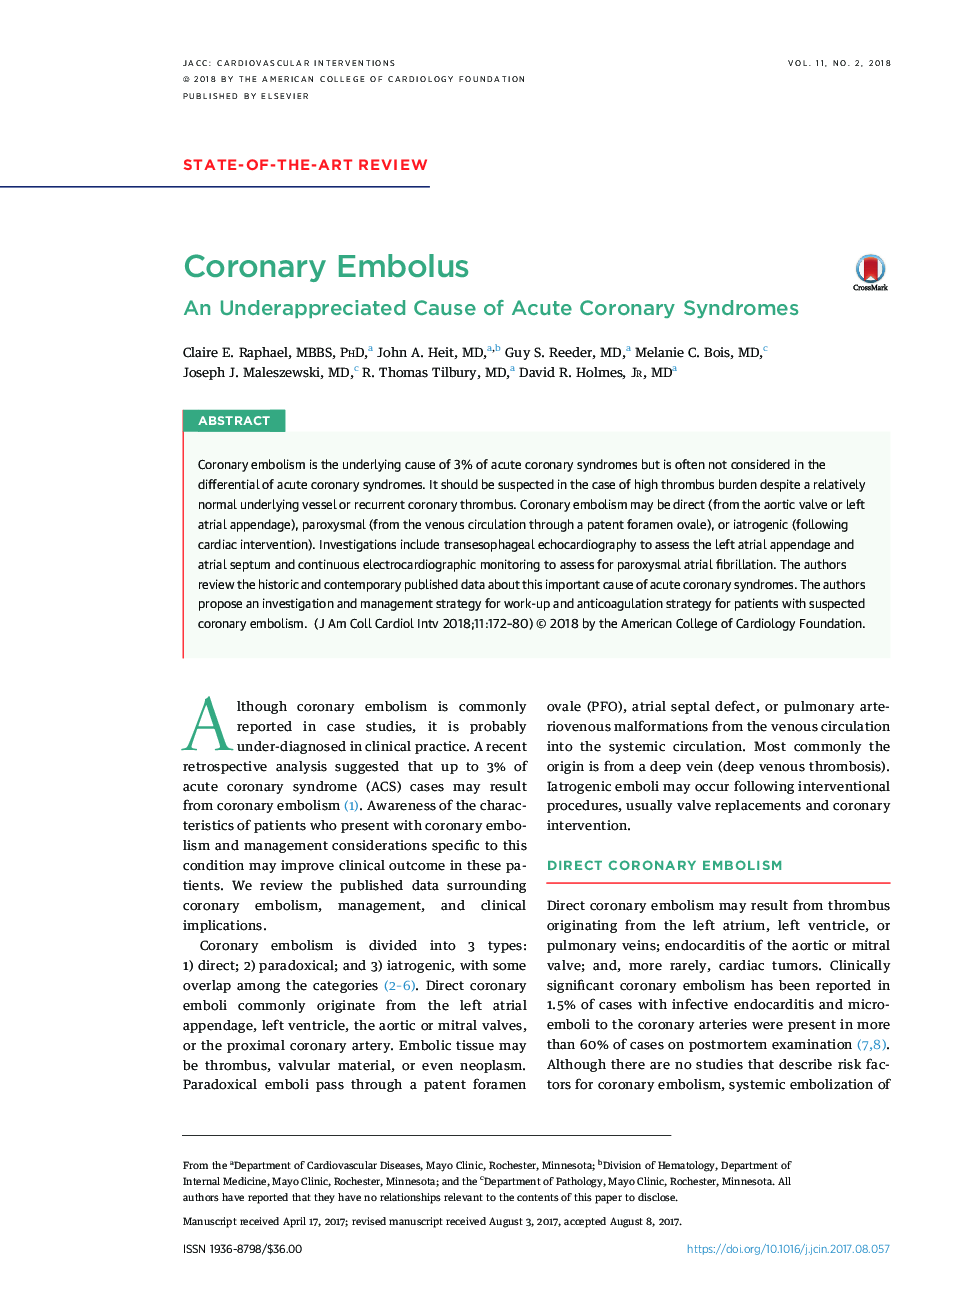 Coronary Embolus